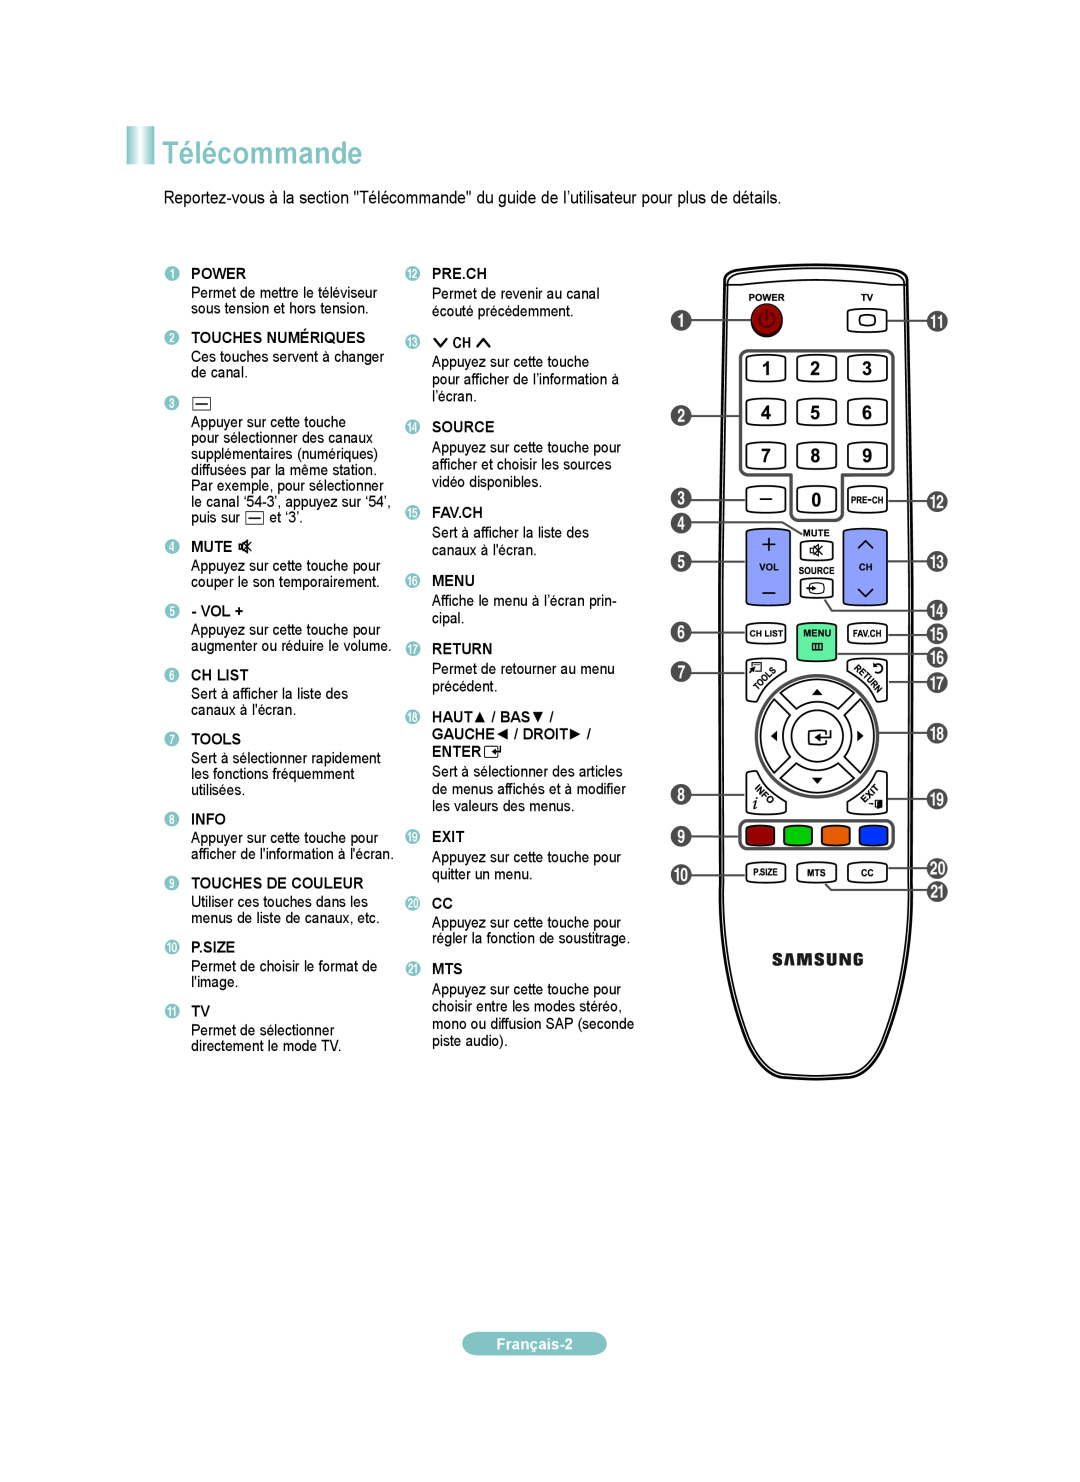 Samsung BN-01J-00, BN68-01976J-00 setup guide Télécommande, Français-, @ # $ 